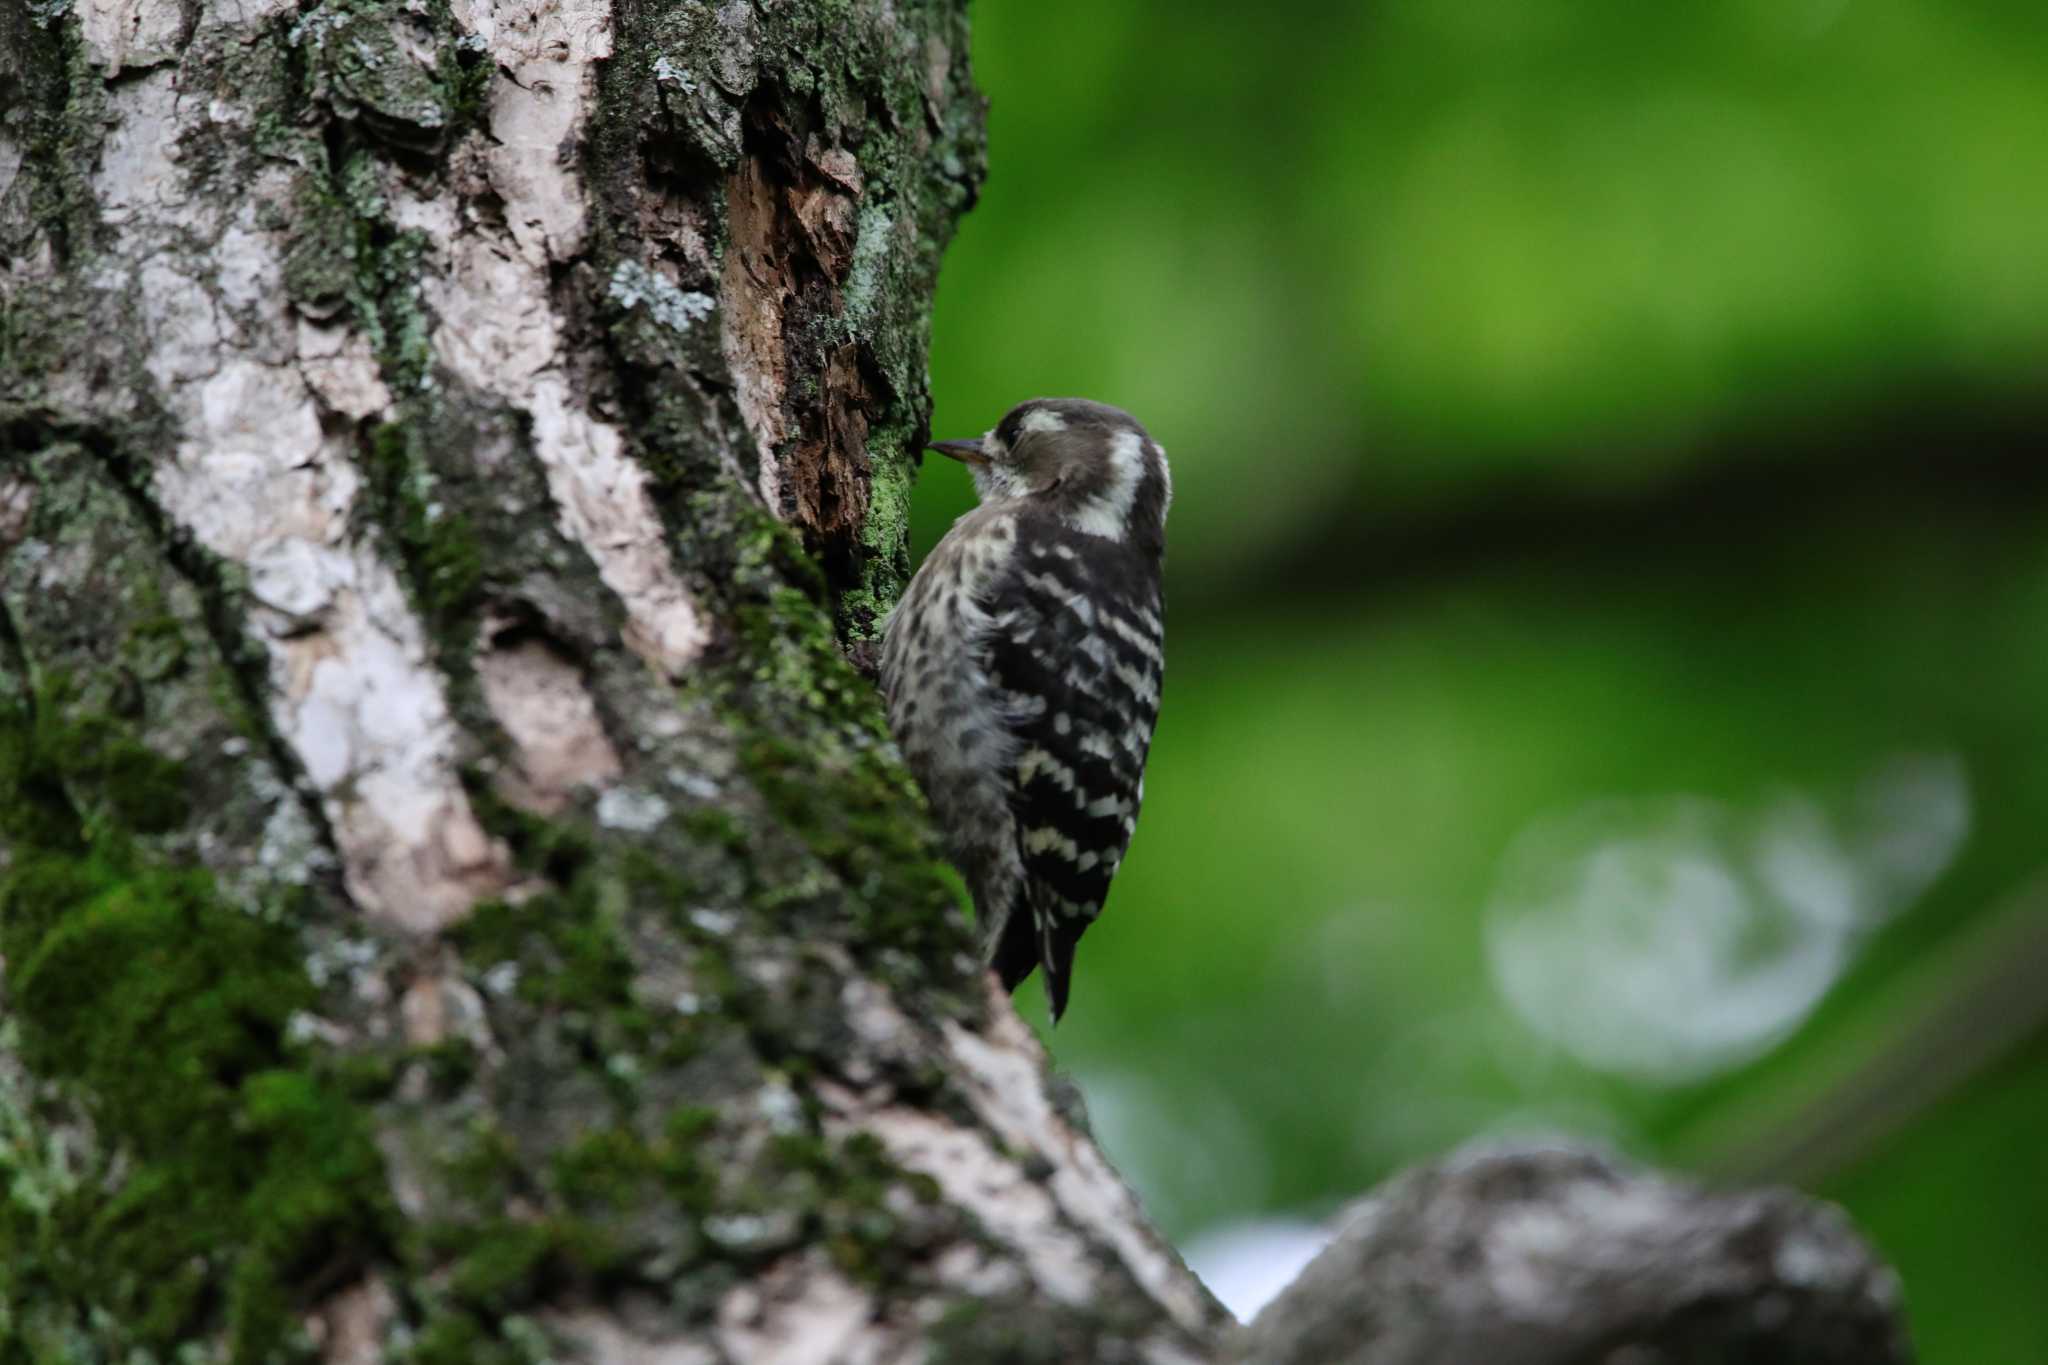 Photo of Japanese Pygmy Woodpecker at Osaka castle park by 蕾@sourai0443